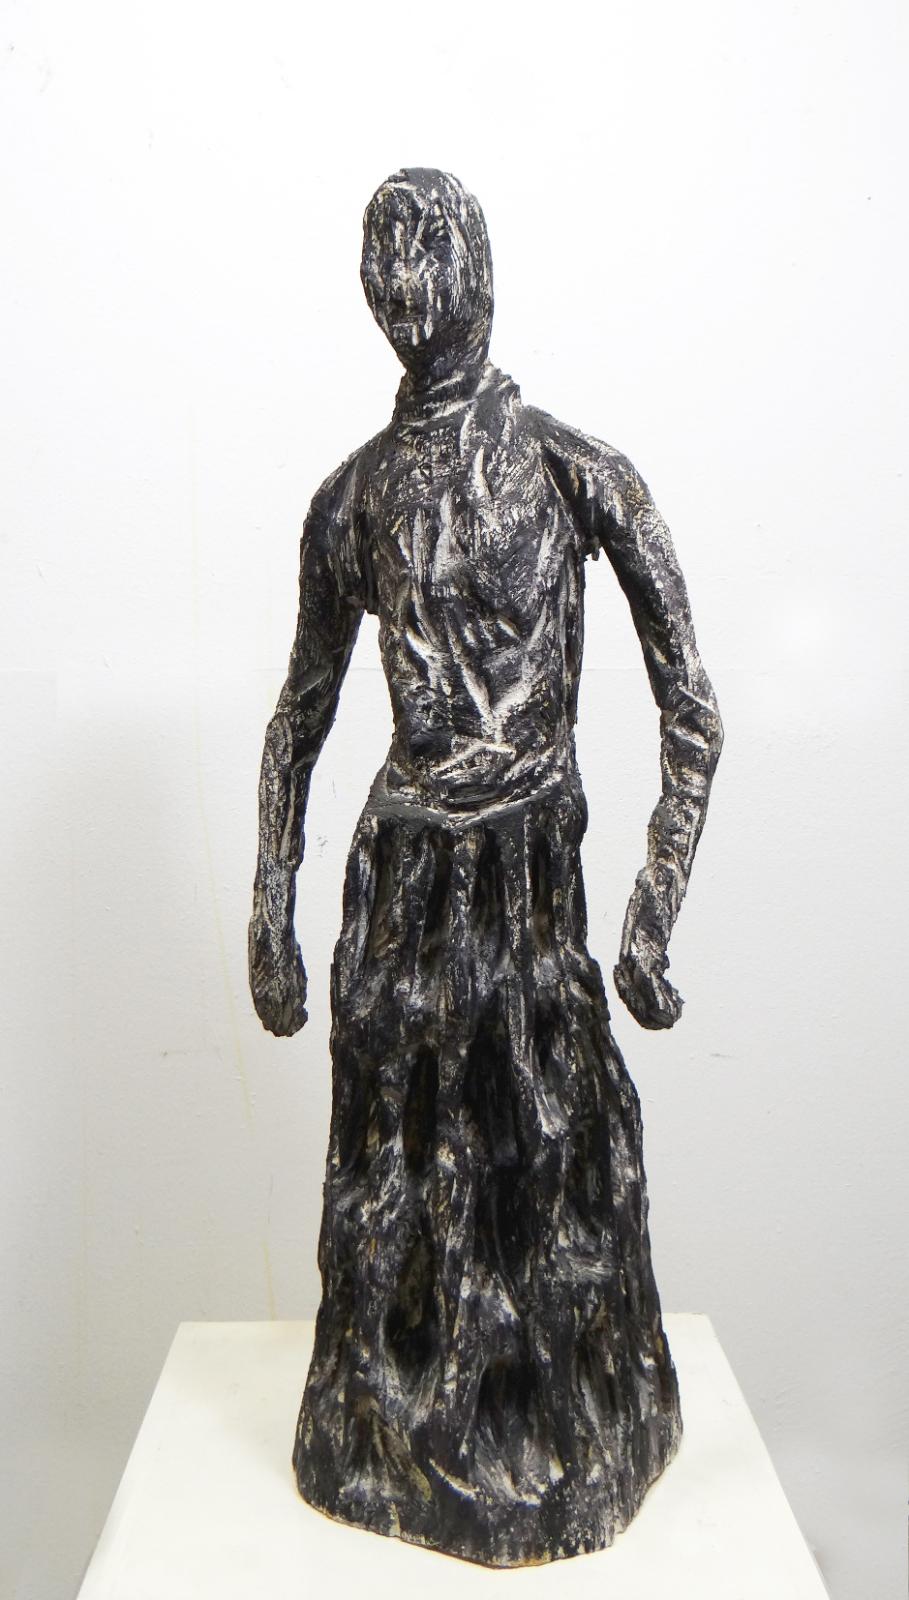 Christofer Kochs, Kleidfigur, 2007, Holz, Höhe: 85 cm, Preis auf Anfrage